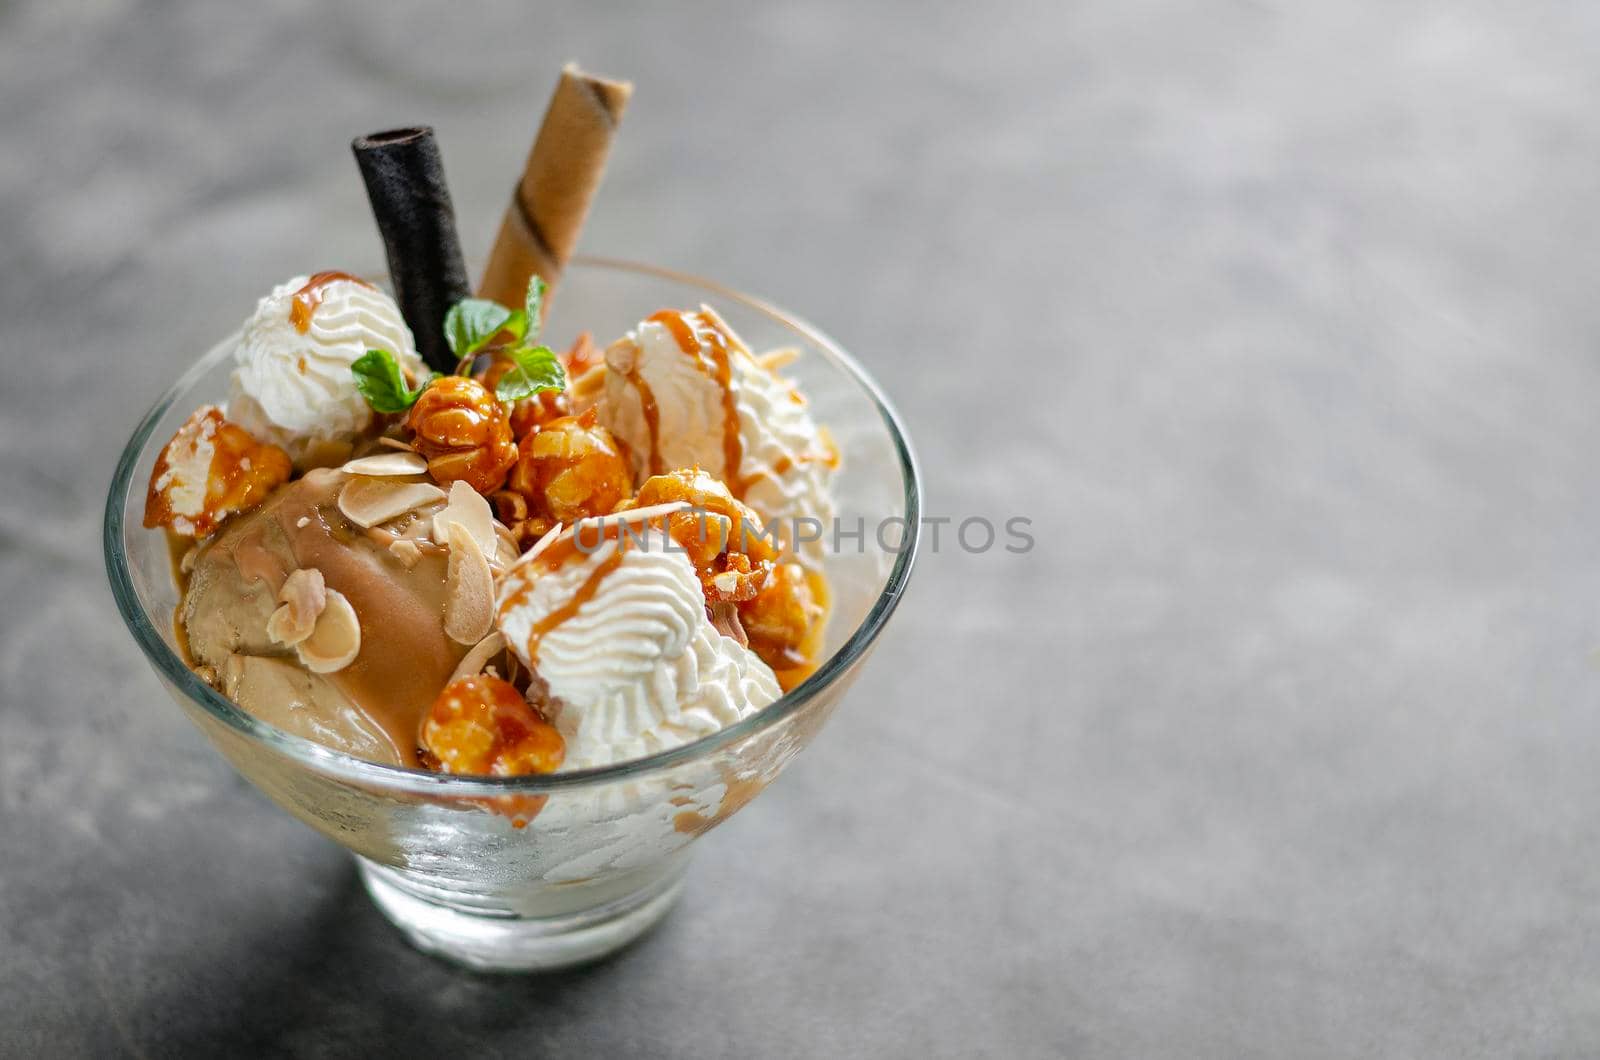 caramel and almond ice cream sundae dessert in glass bowl by jackmalipan